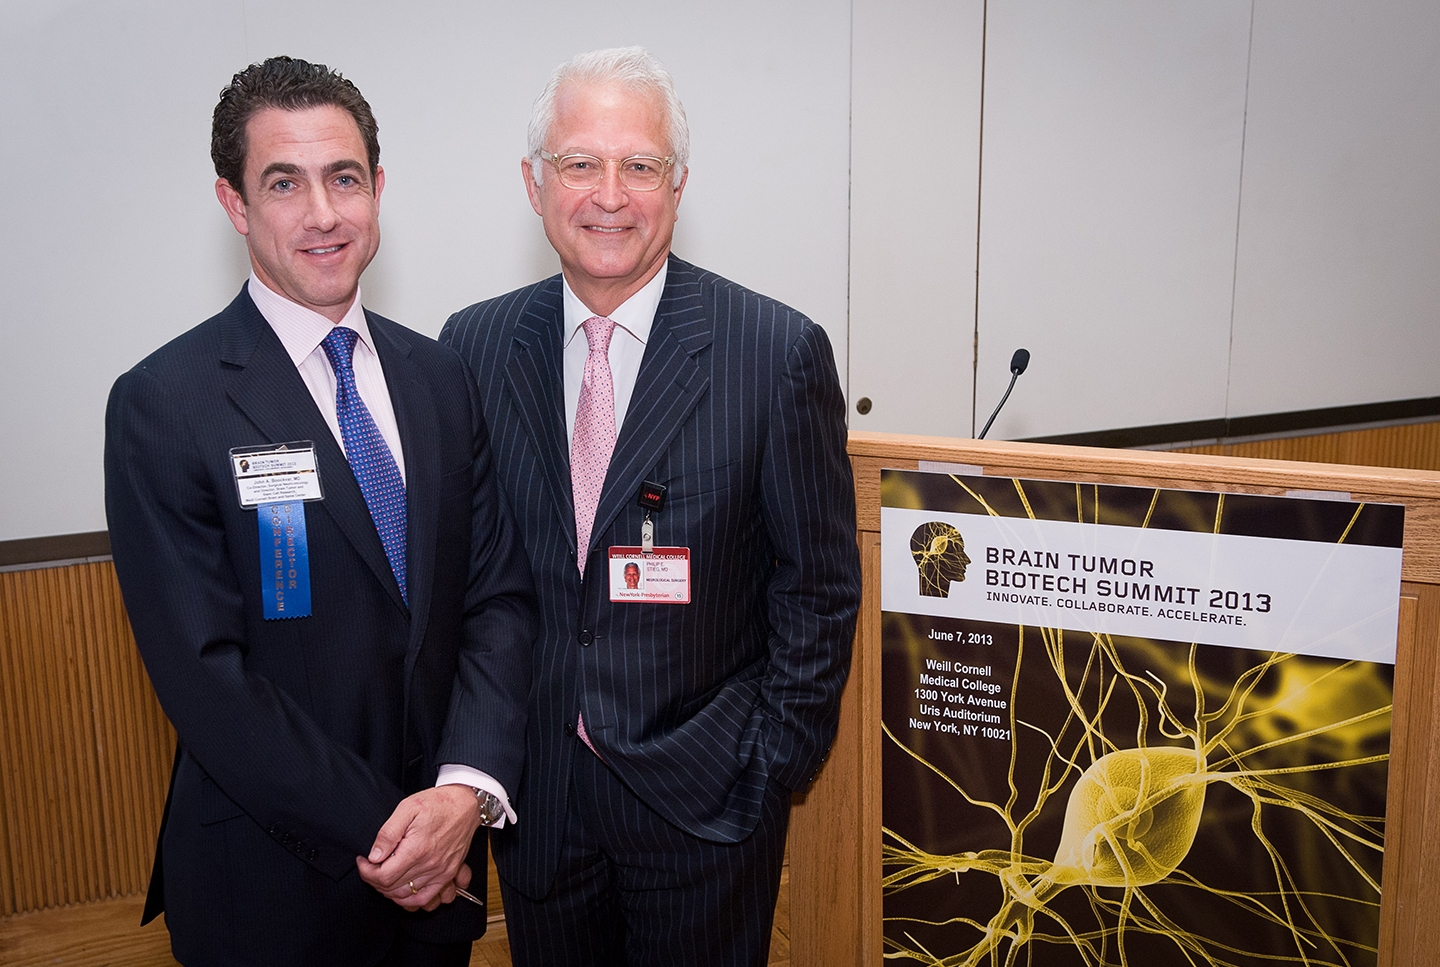 Dr. John Boockvar, left, Dr. Philip Stieg, right, at the second annual Brain Tumor Biotech Summit Photo credit: Amelia Panico